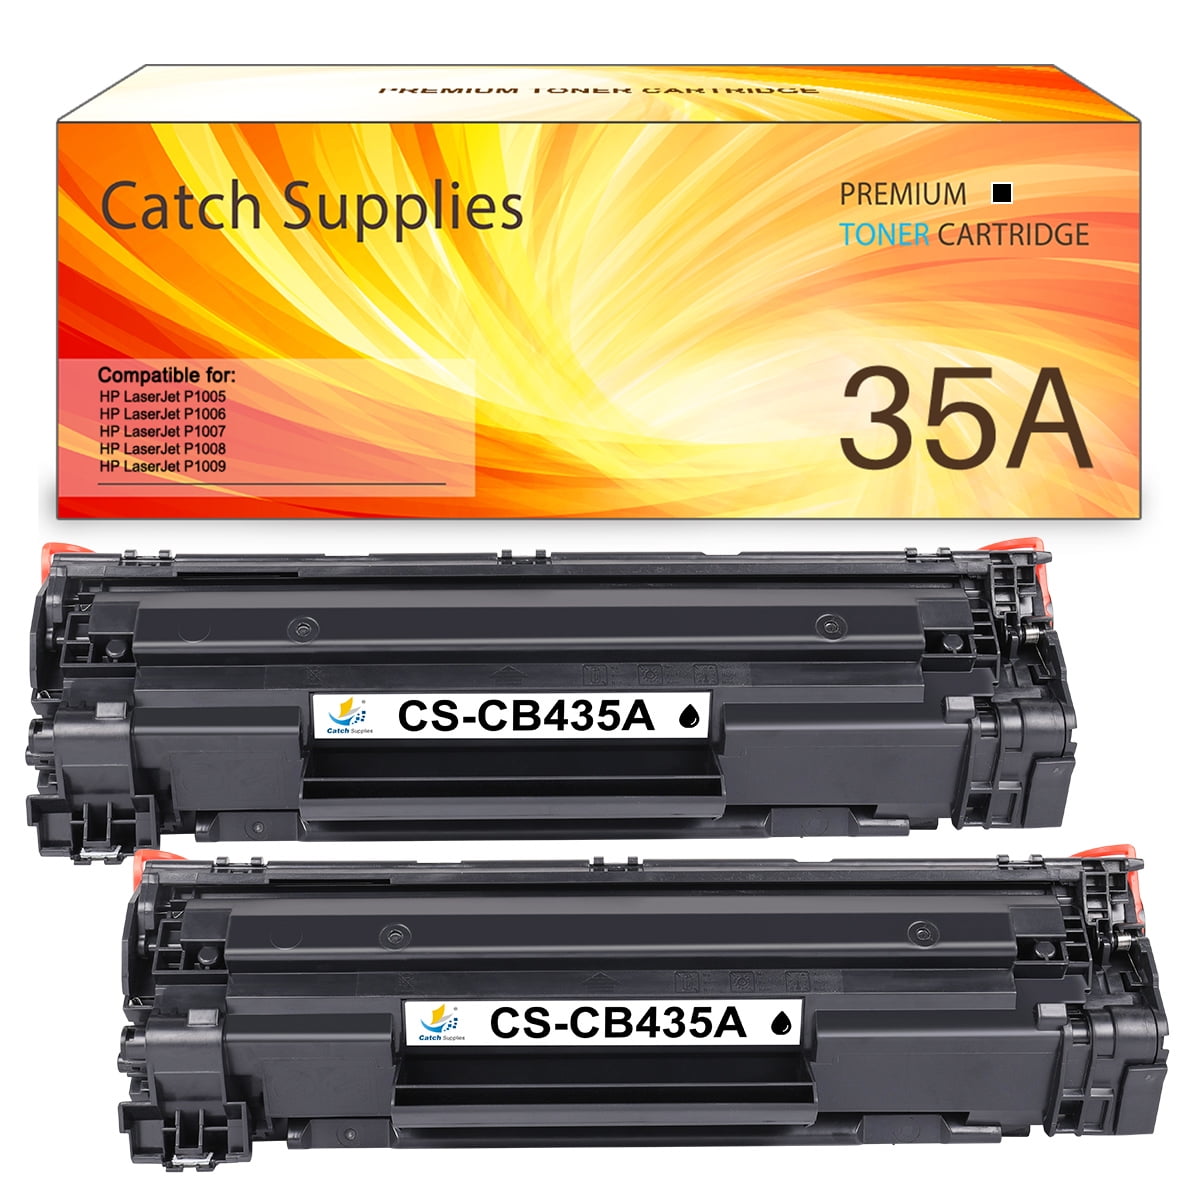 Catch Supplies 3-Pack Compatible for HP CB435A 35A for LaserJet P1005 P1006 P1007 P1008 P1009 - Walmart.com